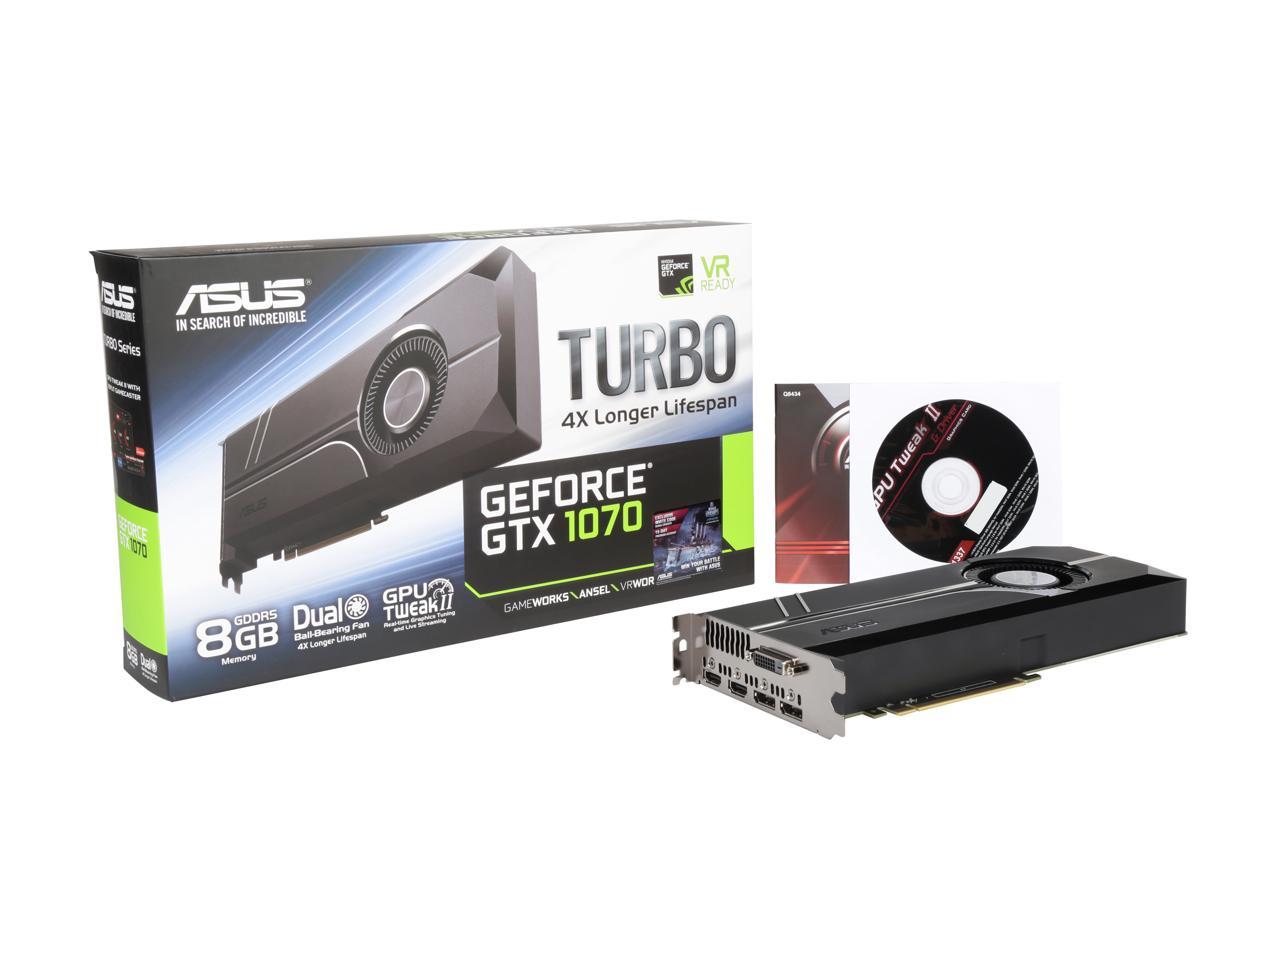 ASUS Turbo GeForce GTX 1070 Video Card TURBO-GTX1070-8G - Newegg.com